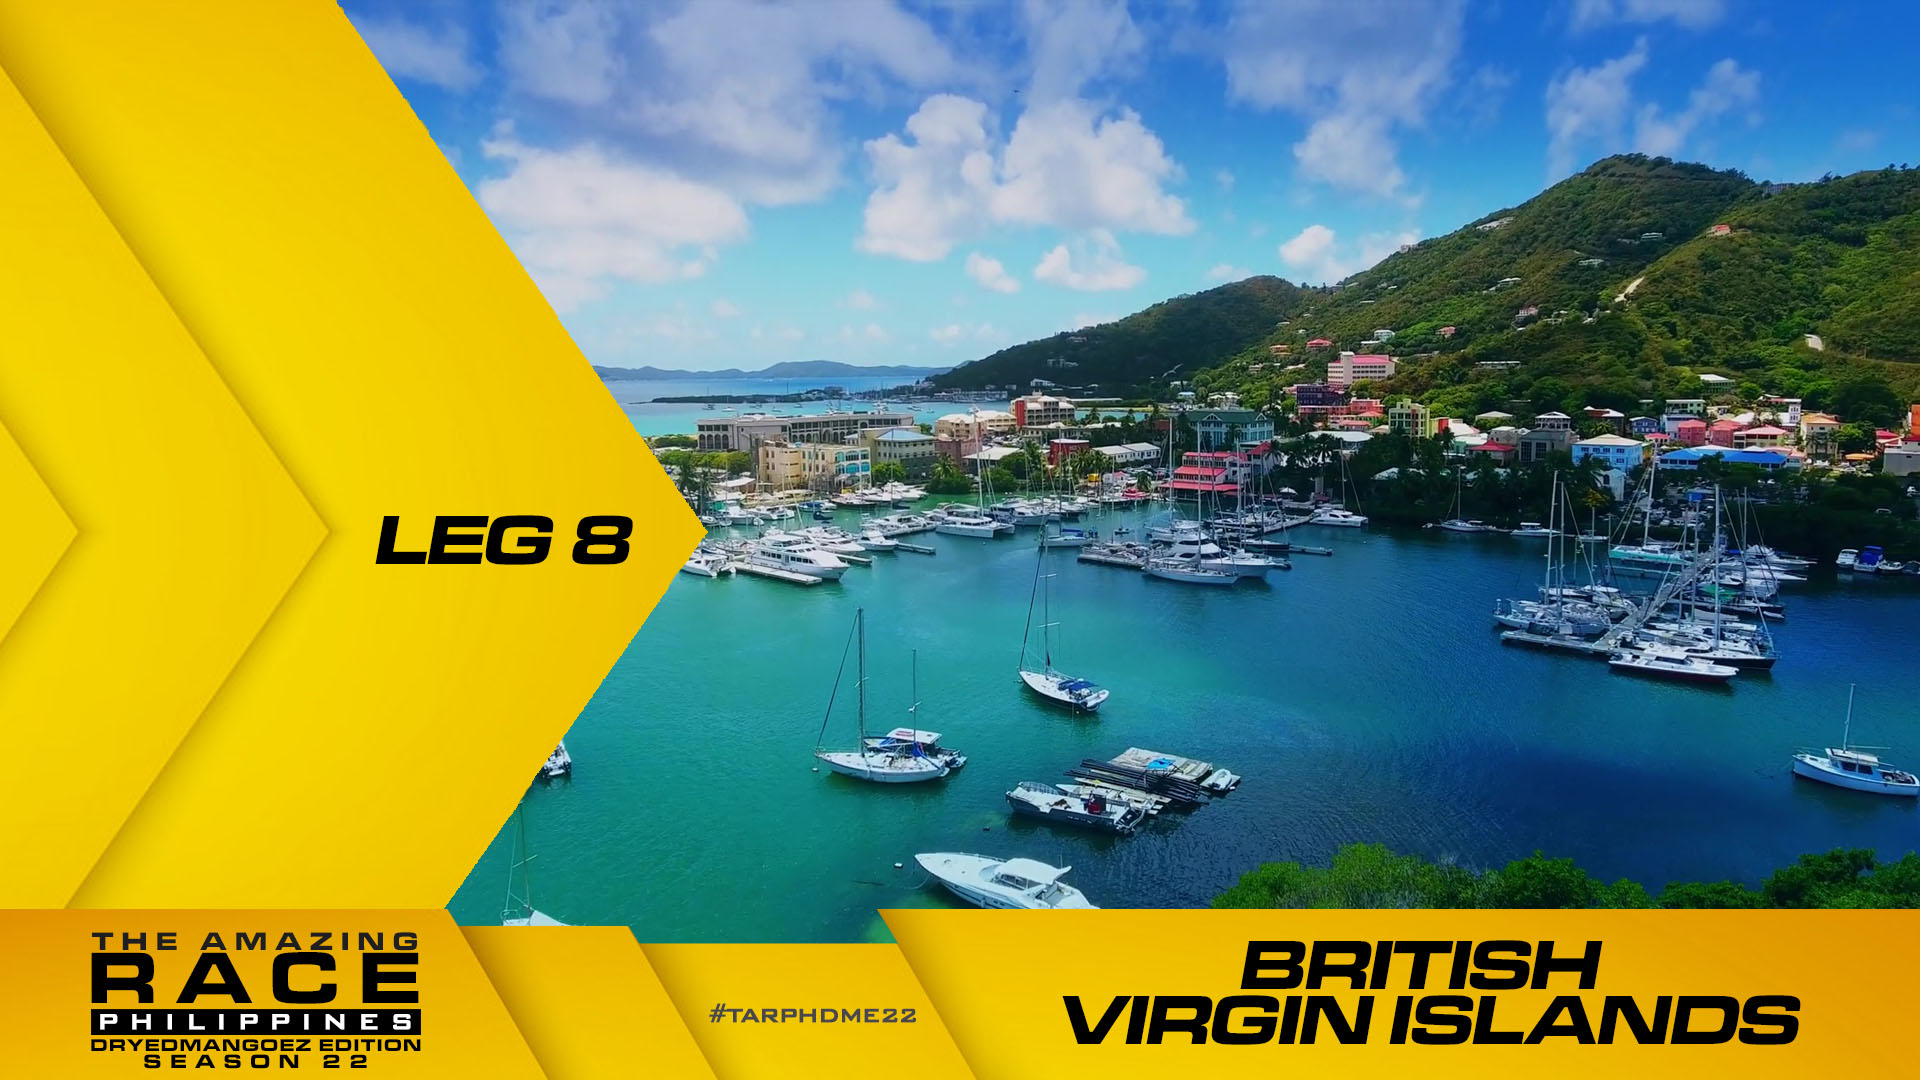 The Amazing Race Philippines: DryedMangoez Edition Season 22, Leg 8 – British Virgin Islands